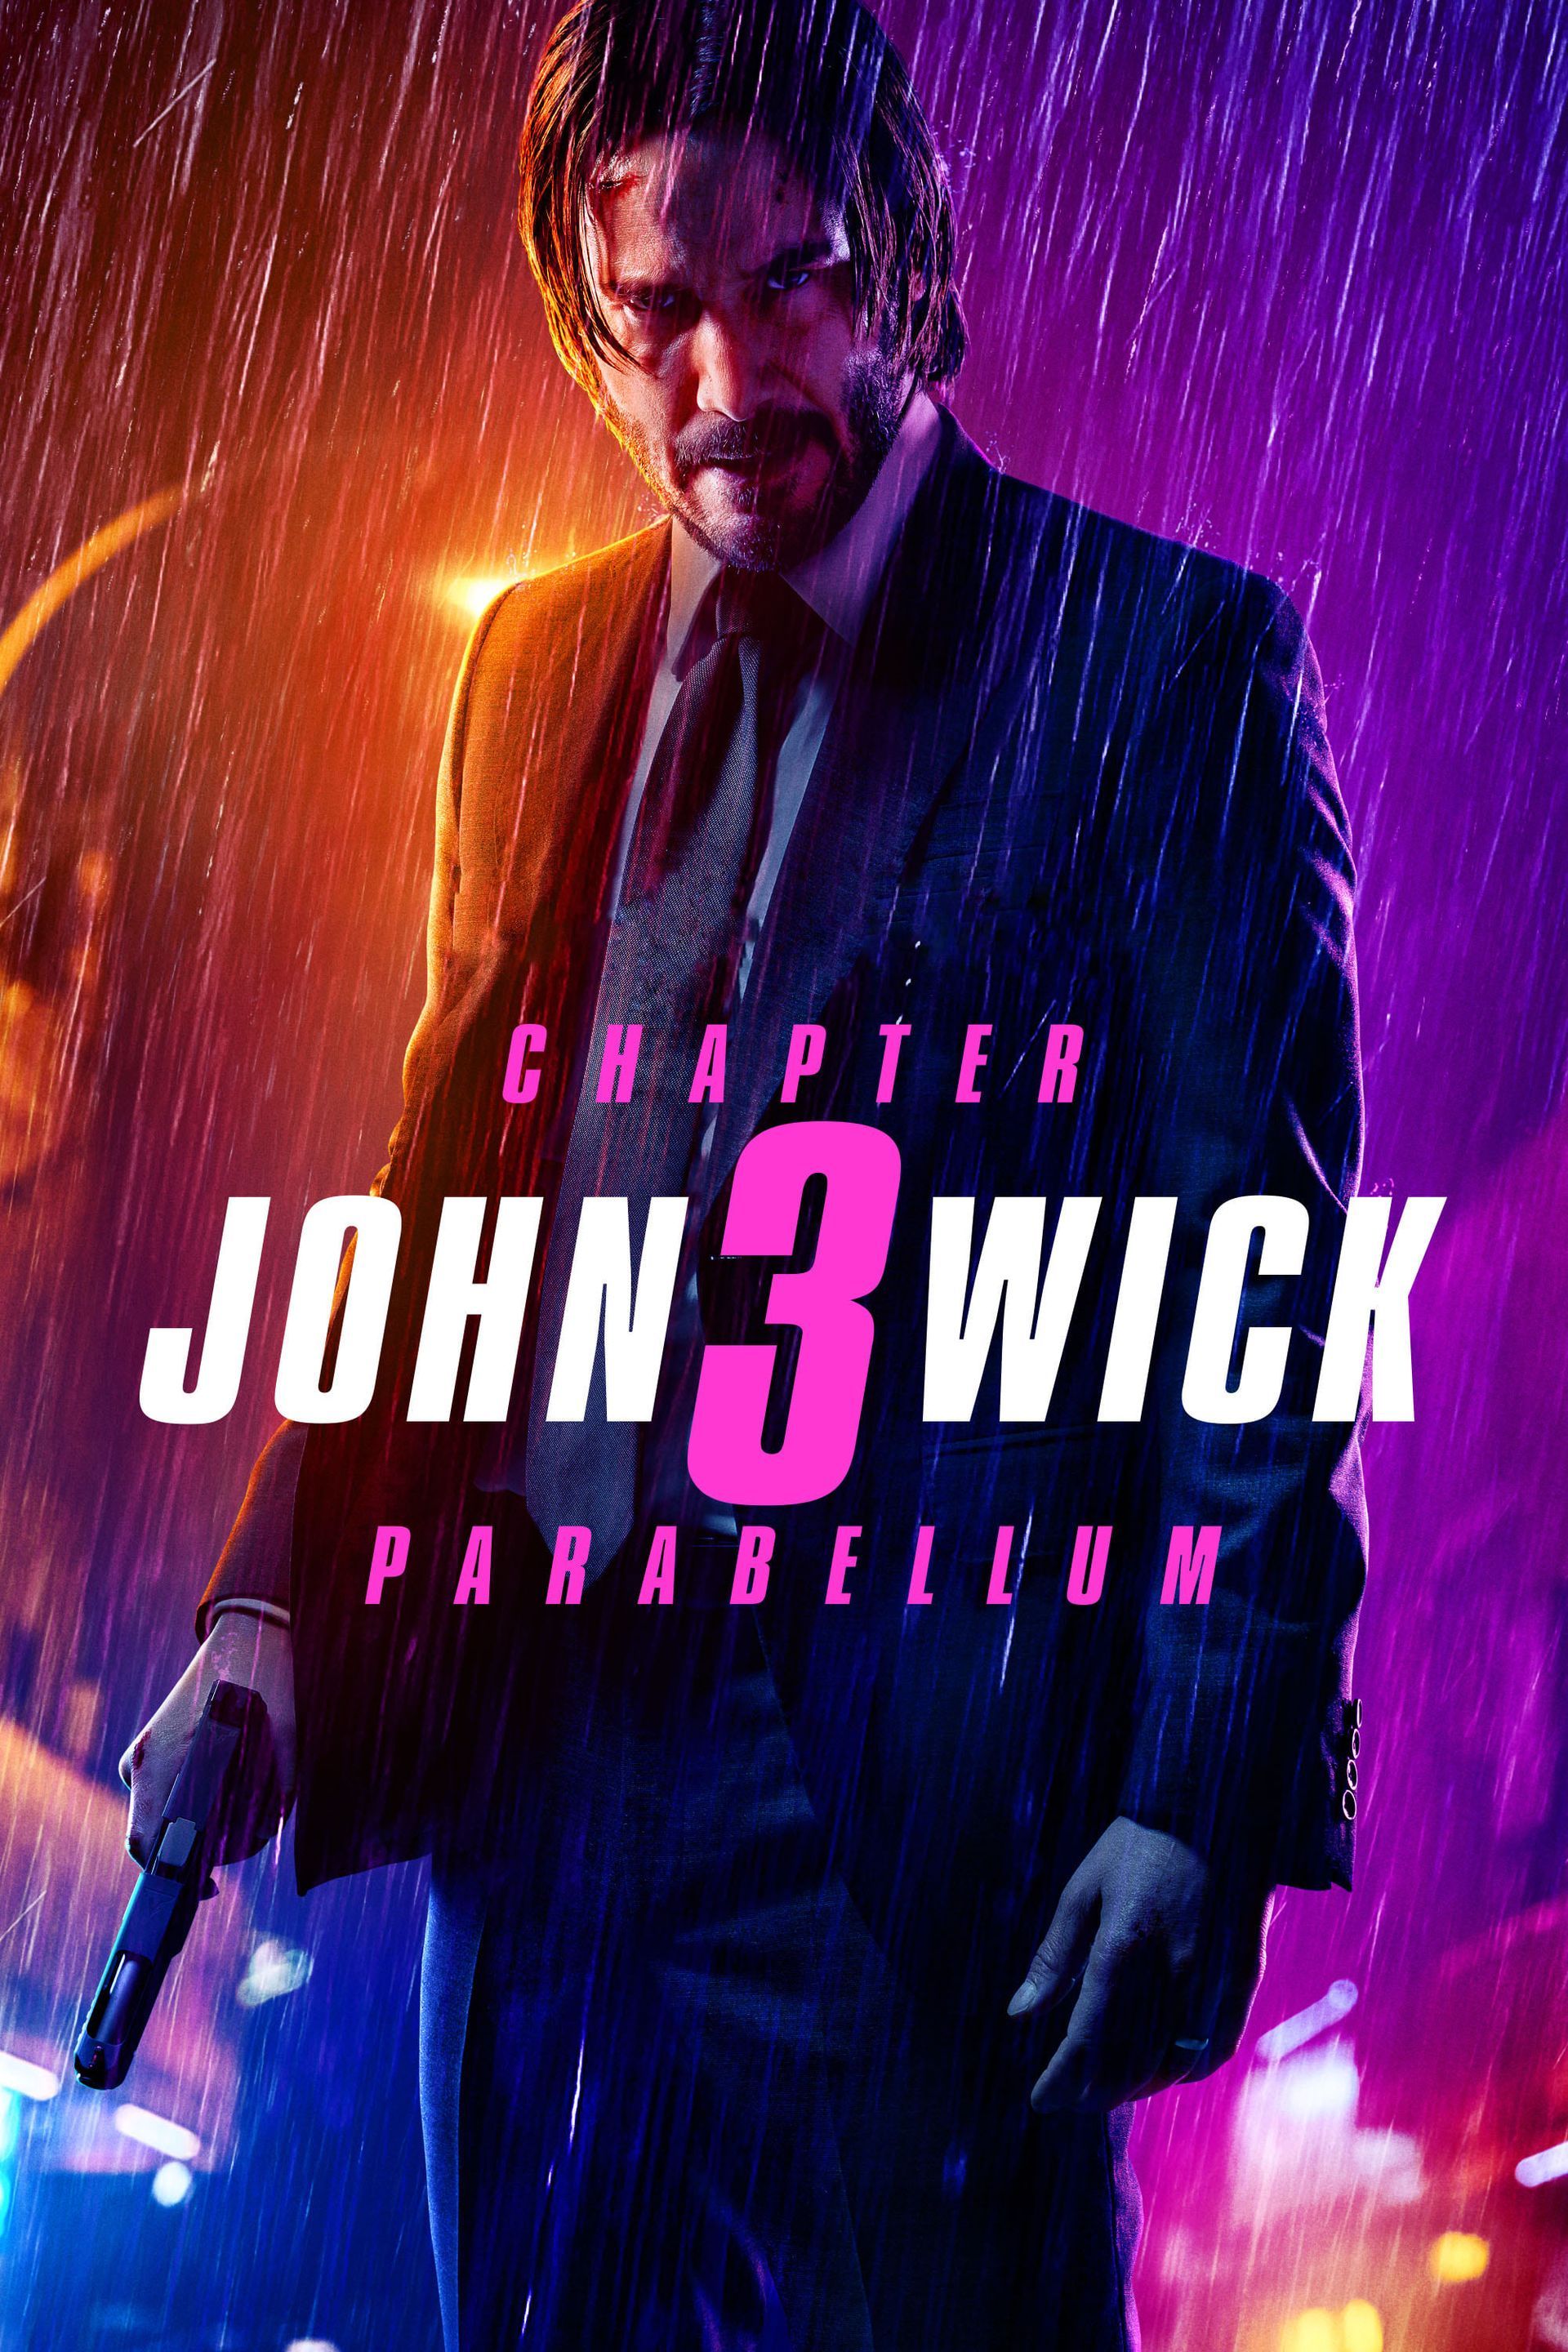 John Wick: Chapter 2 — Mediaversity Reviews